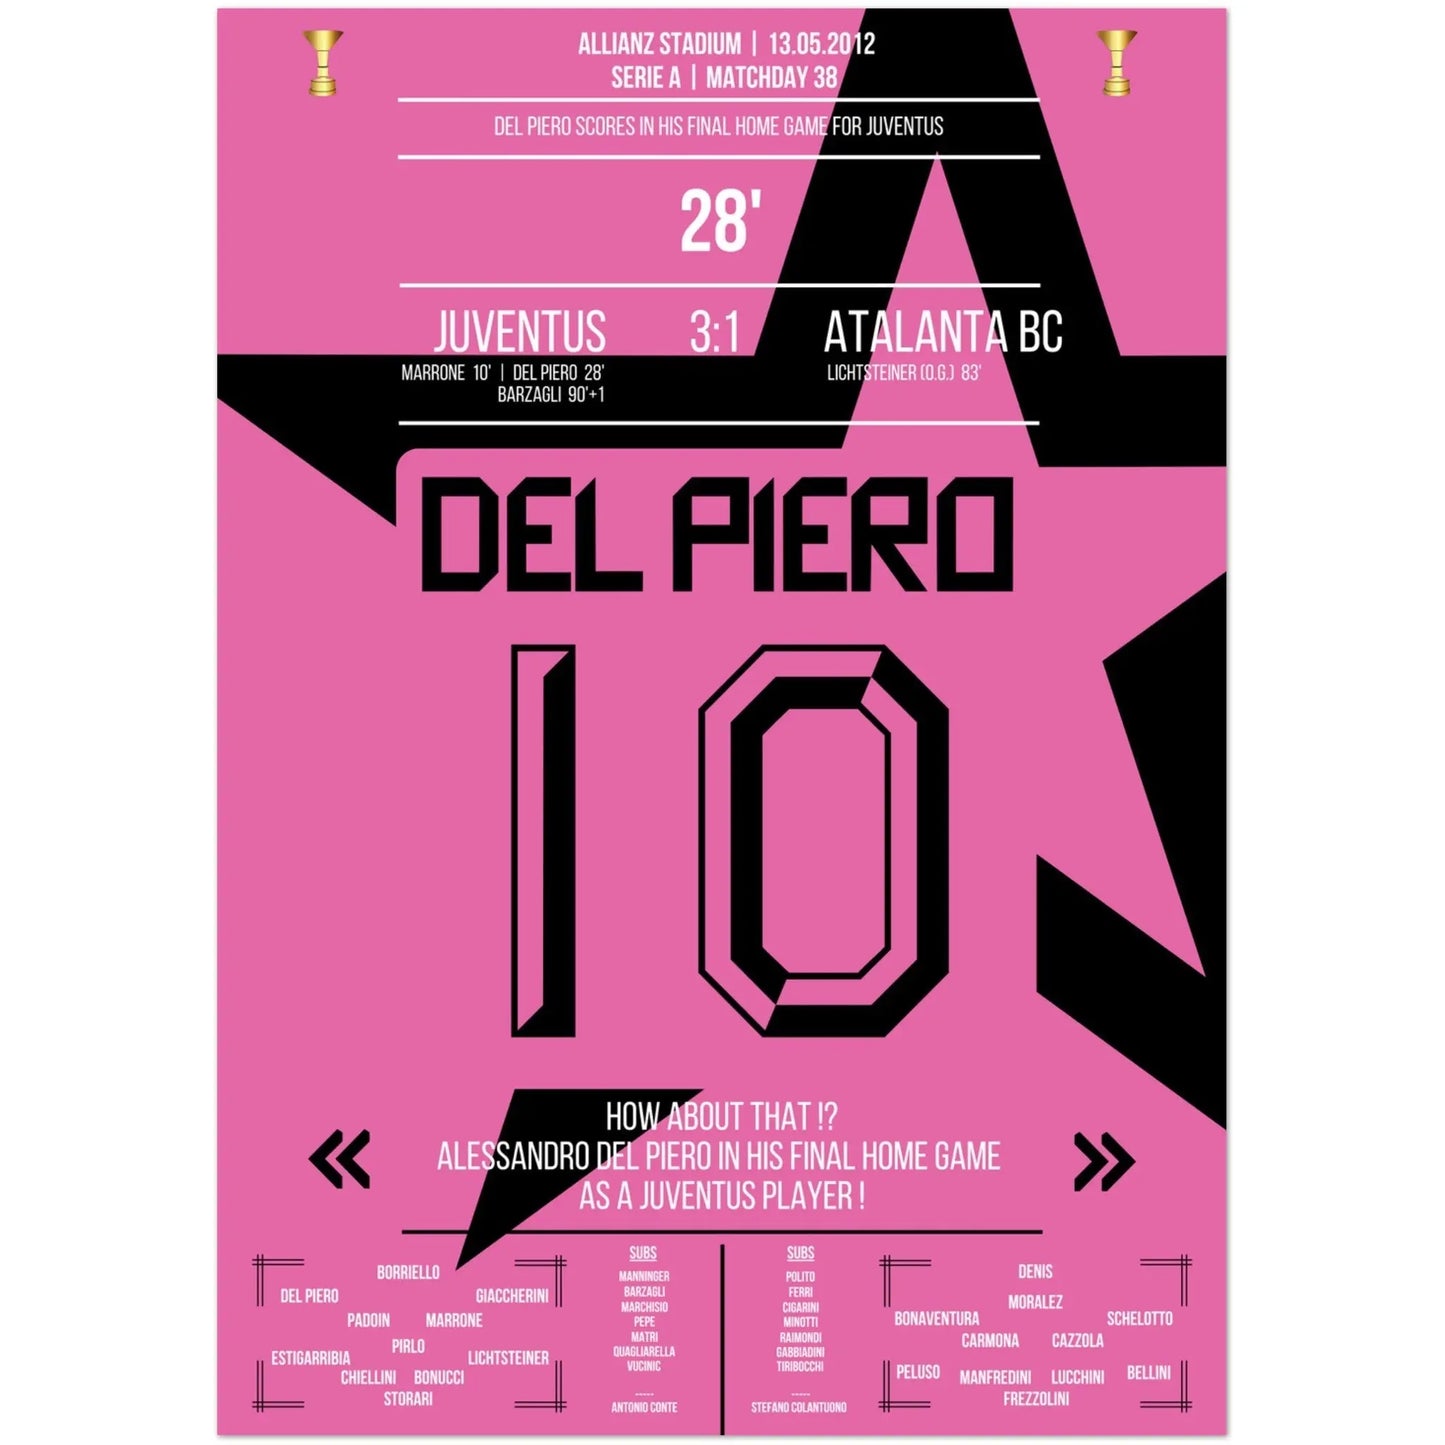 Del Piero's perfecte afscheidsdoelpunt tegen Atalanta in 2011/12